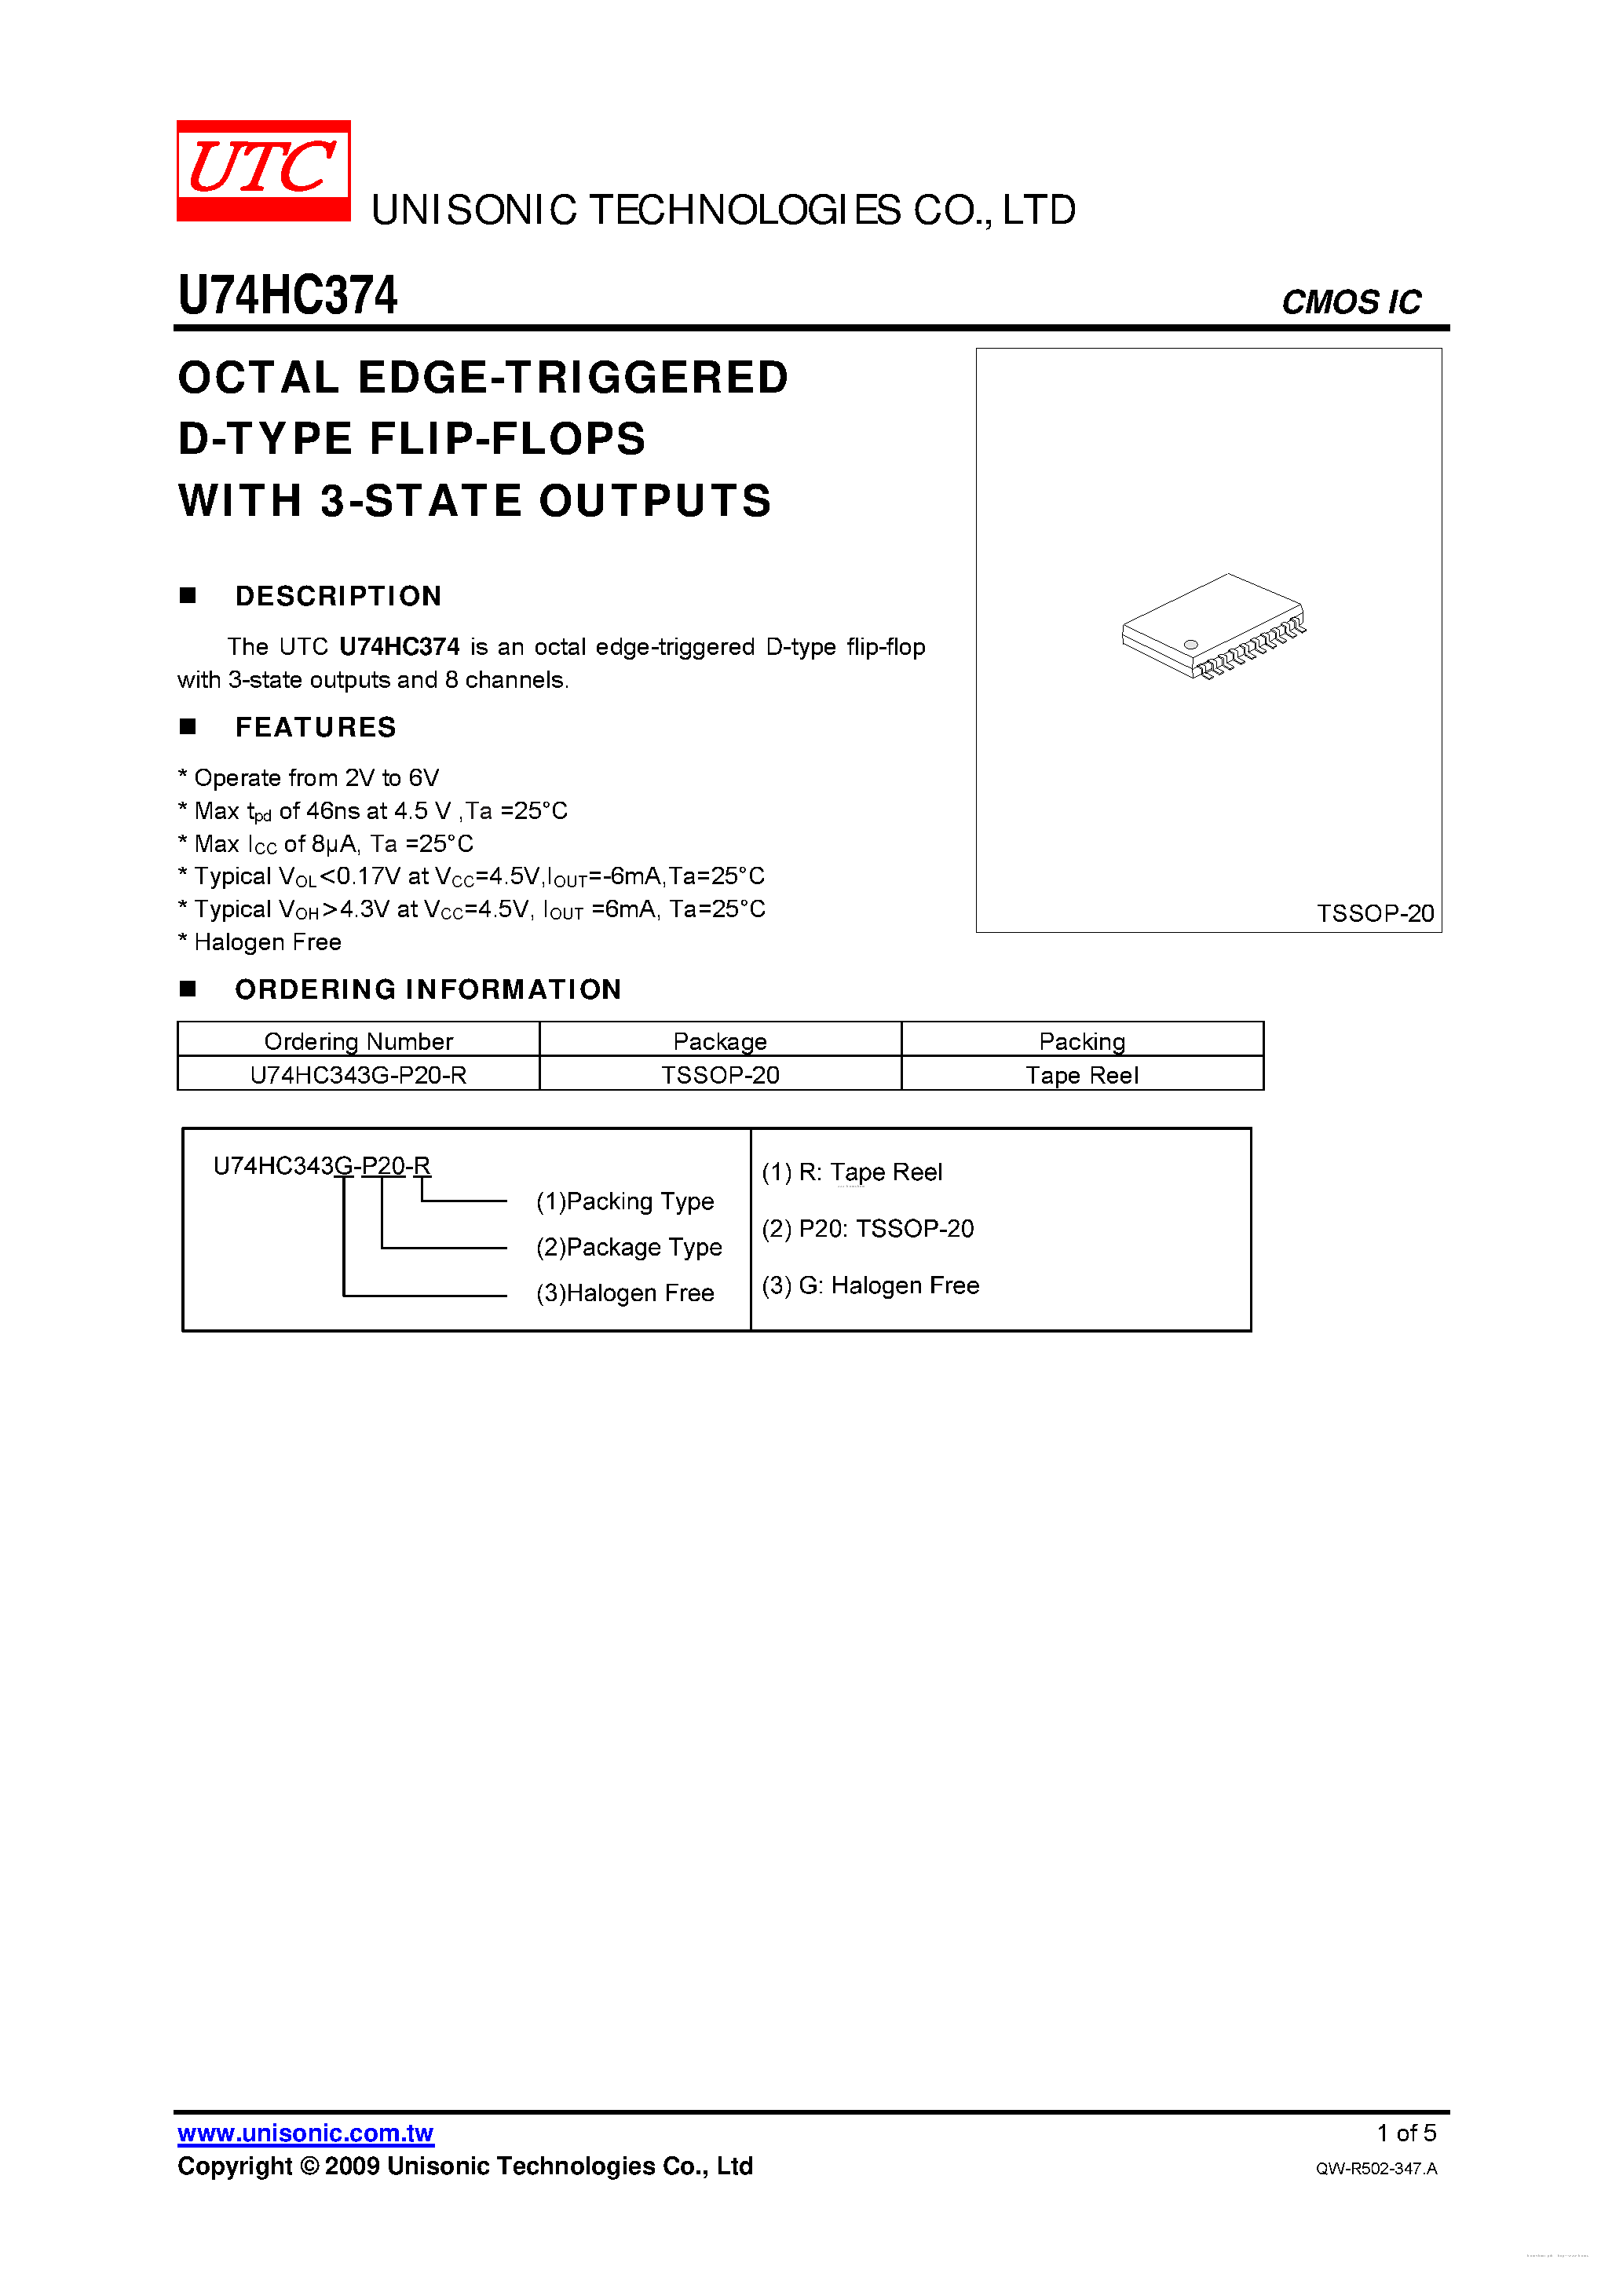 Datasheet U74HC374 - OCTAL EDGE-TRIGGERED D-TYPE FLIP-FLOPS page 1